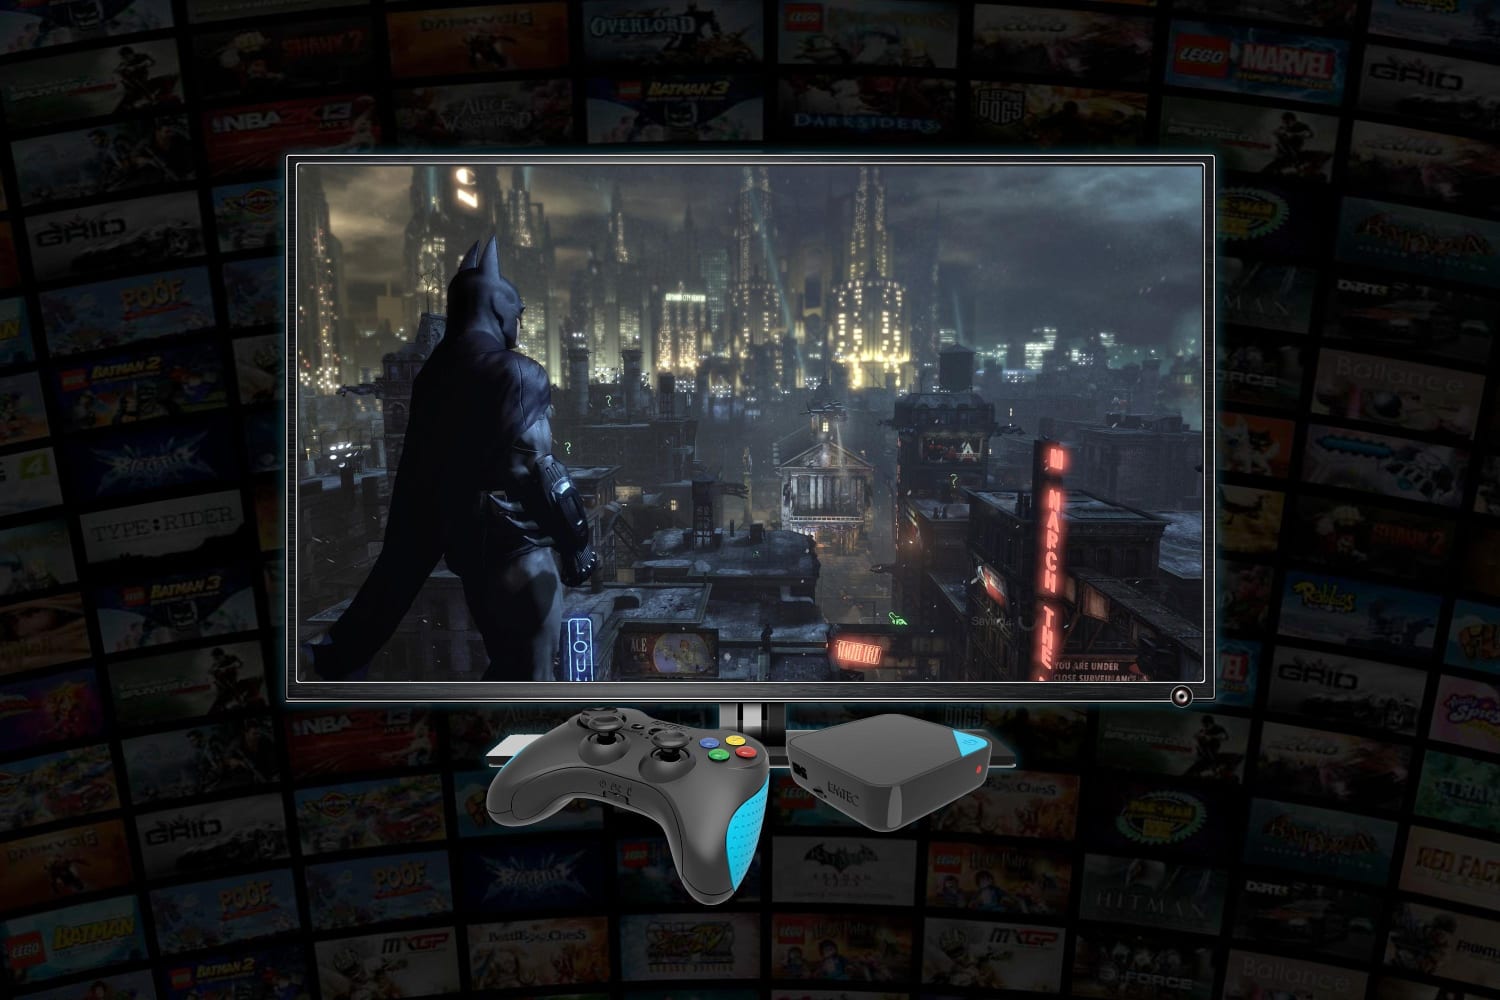 Batman: Arkham City - Gameplay Part 2 - High quality stream and